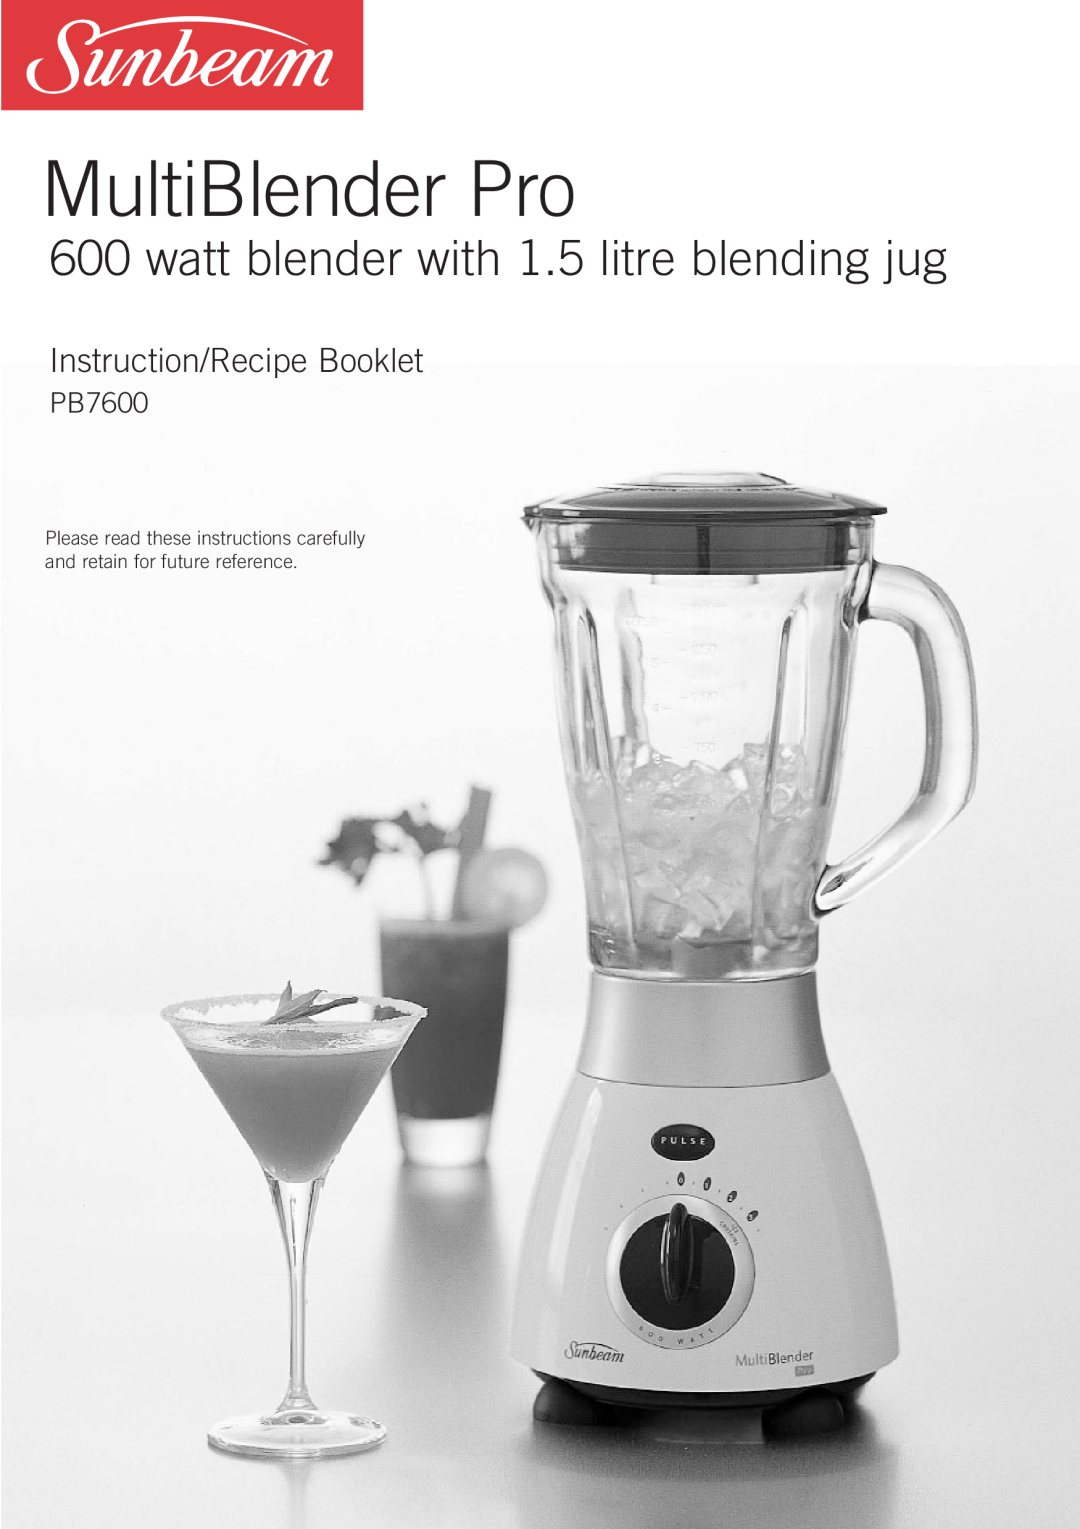 Sunbeam PB7600 manual MultiBlender Pro, watt blender with 1.5 litre blending jug, Instruction/Recipe Booklet 